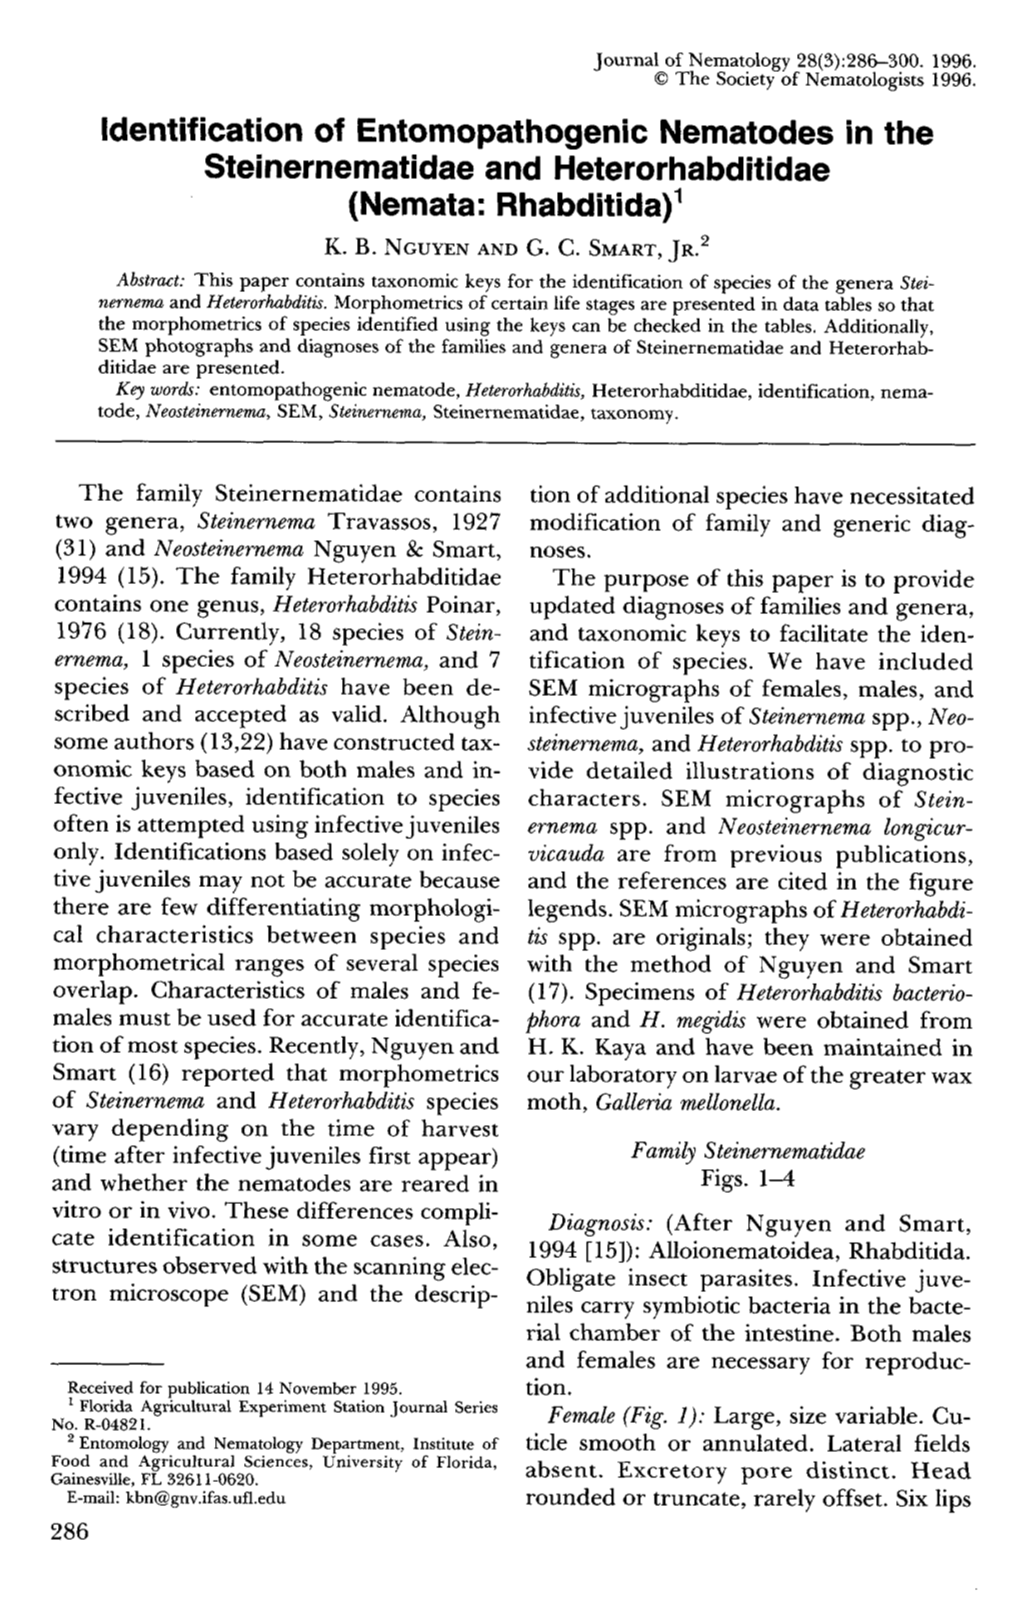 Identification of Entomopathogenic Nematodes in the Steinernematidae and Heterorhabditidae (Nemata: Rhabditida) K